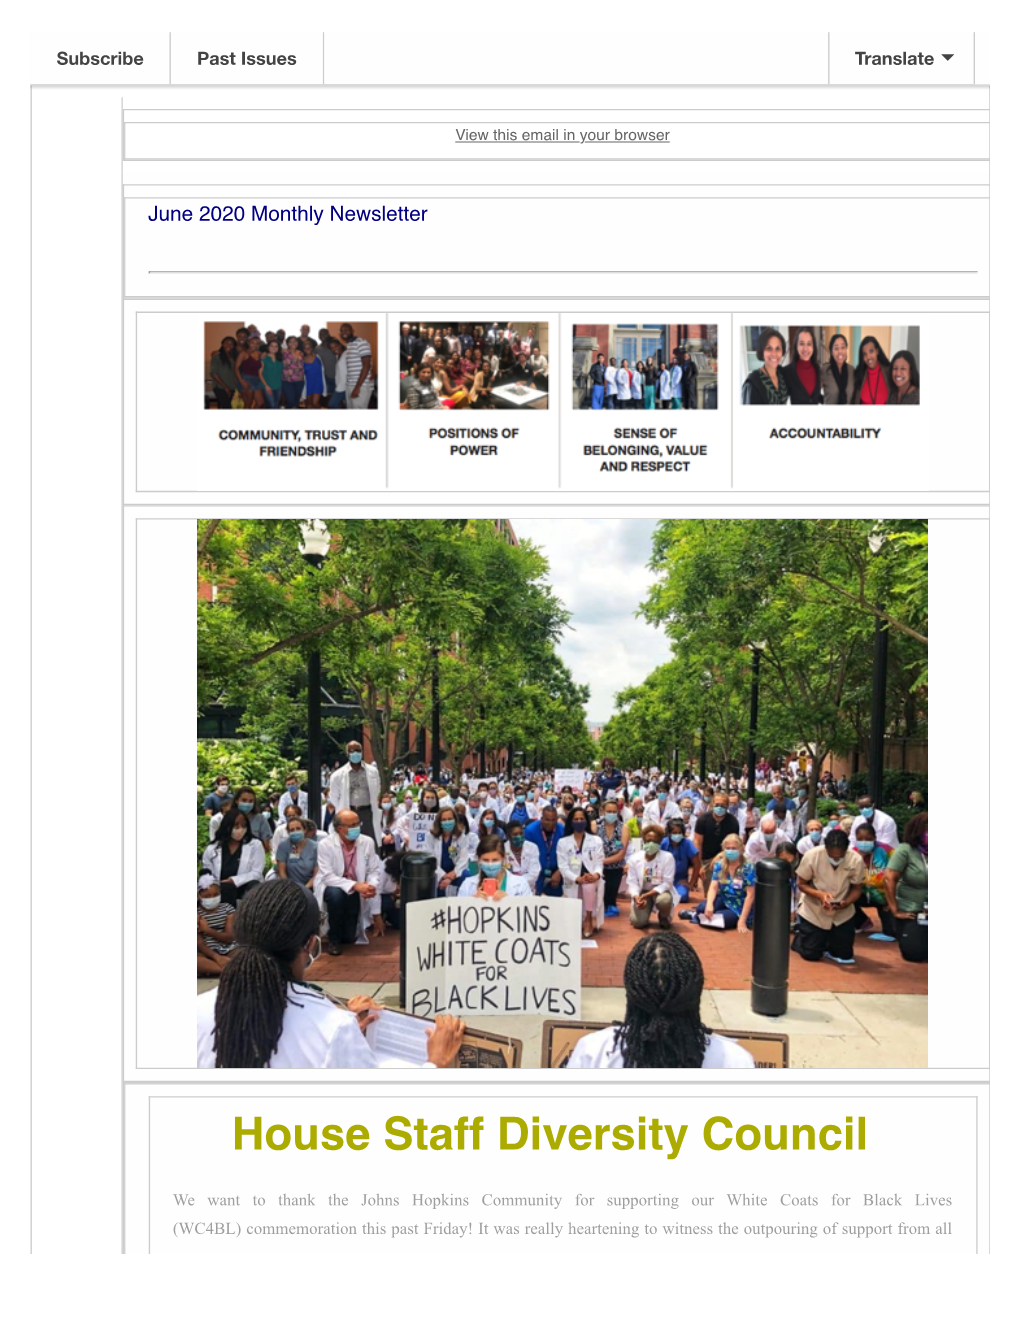 Johns Hopkins House Staff Diversity Council-June 2020 Newsletter